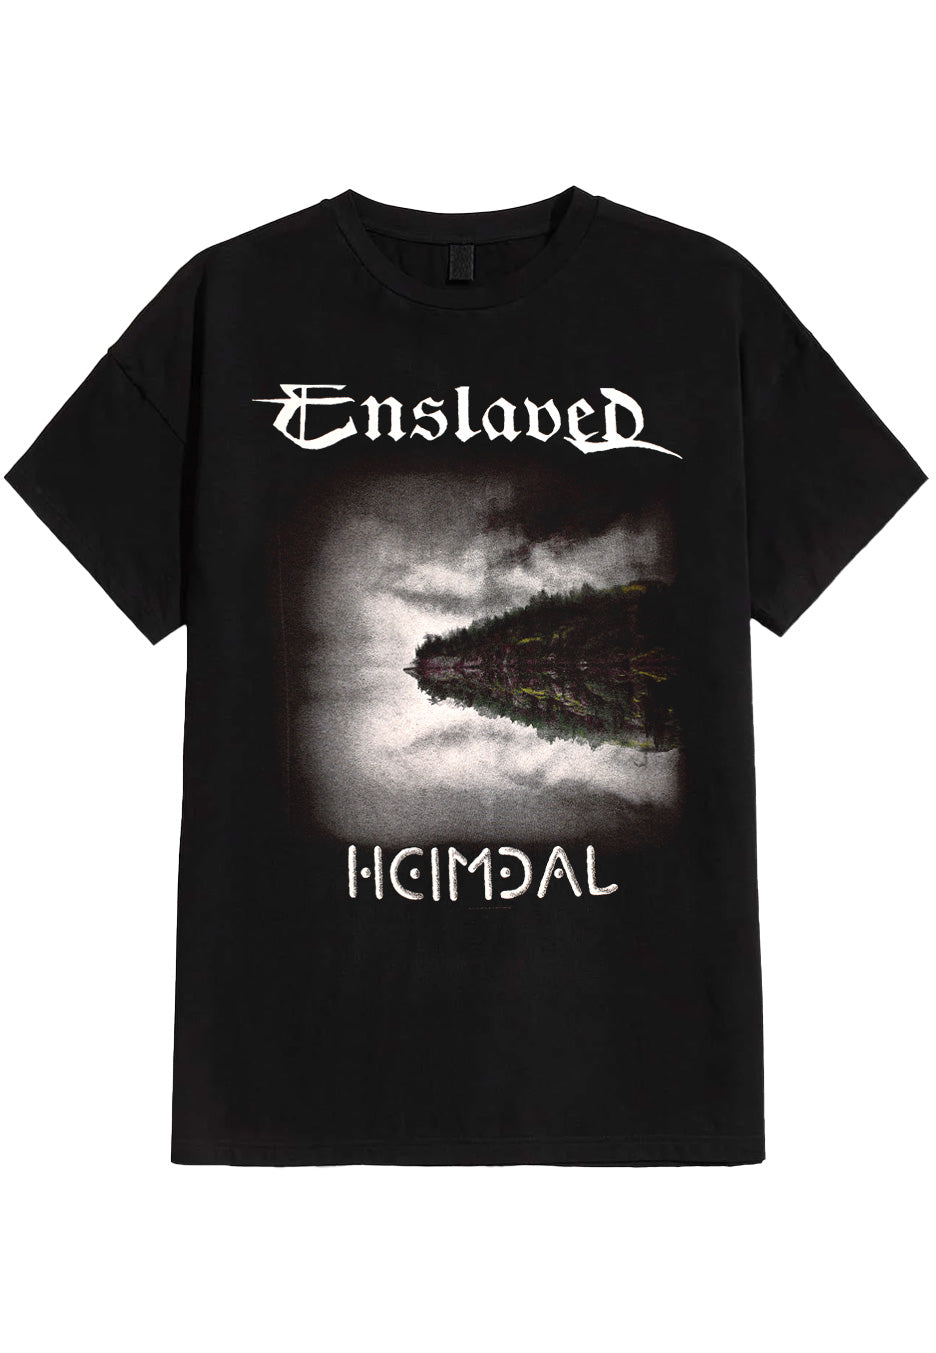 Enslaved - Heimdal - T-Shirt